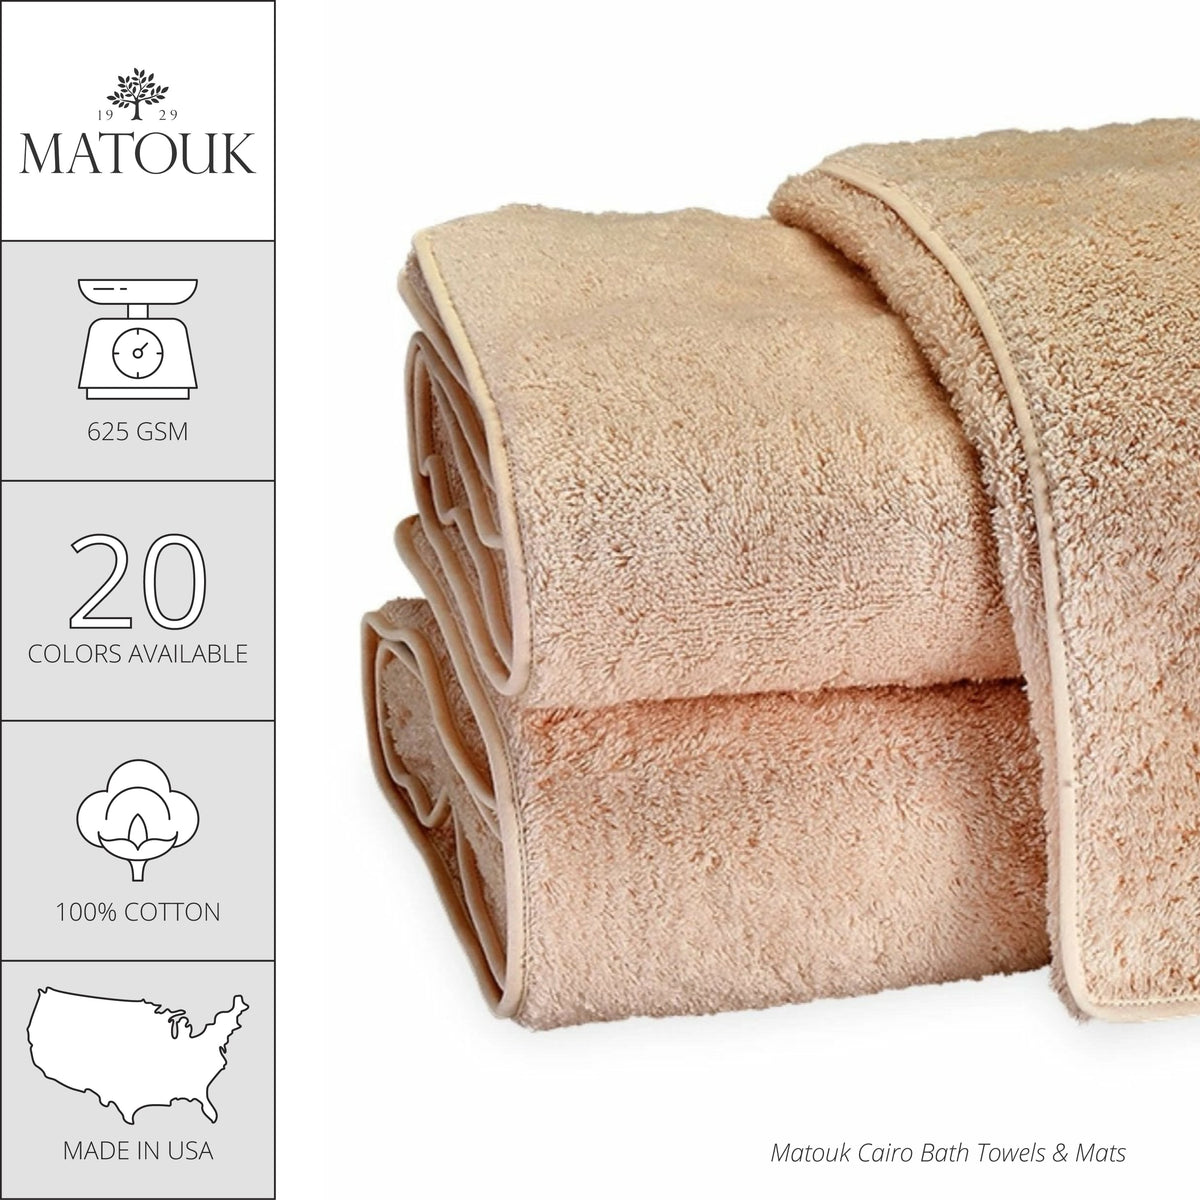 Matouk Cairo Scallop Bath Towels and Mats - Light Blue